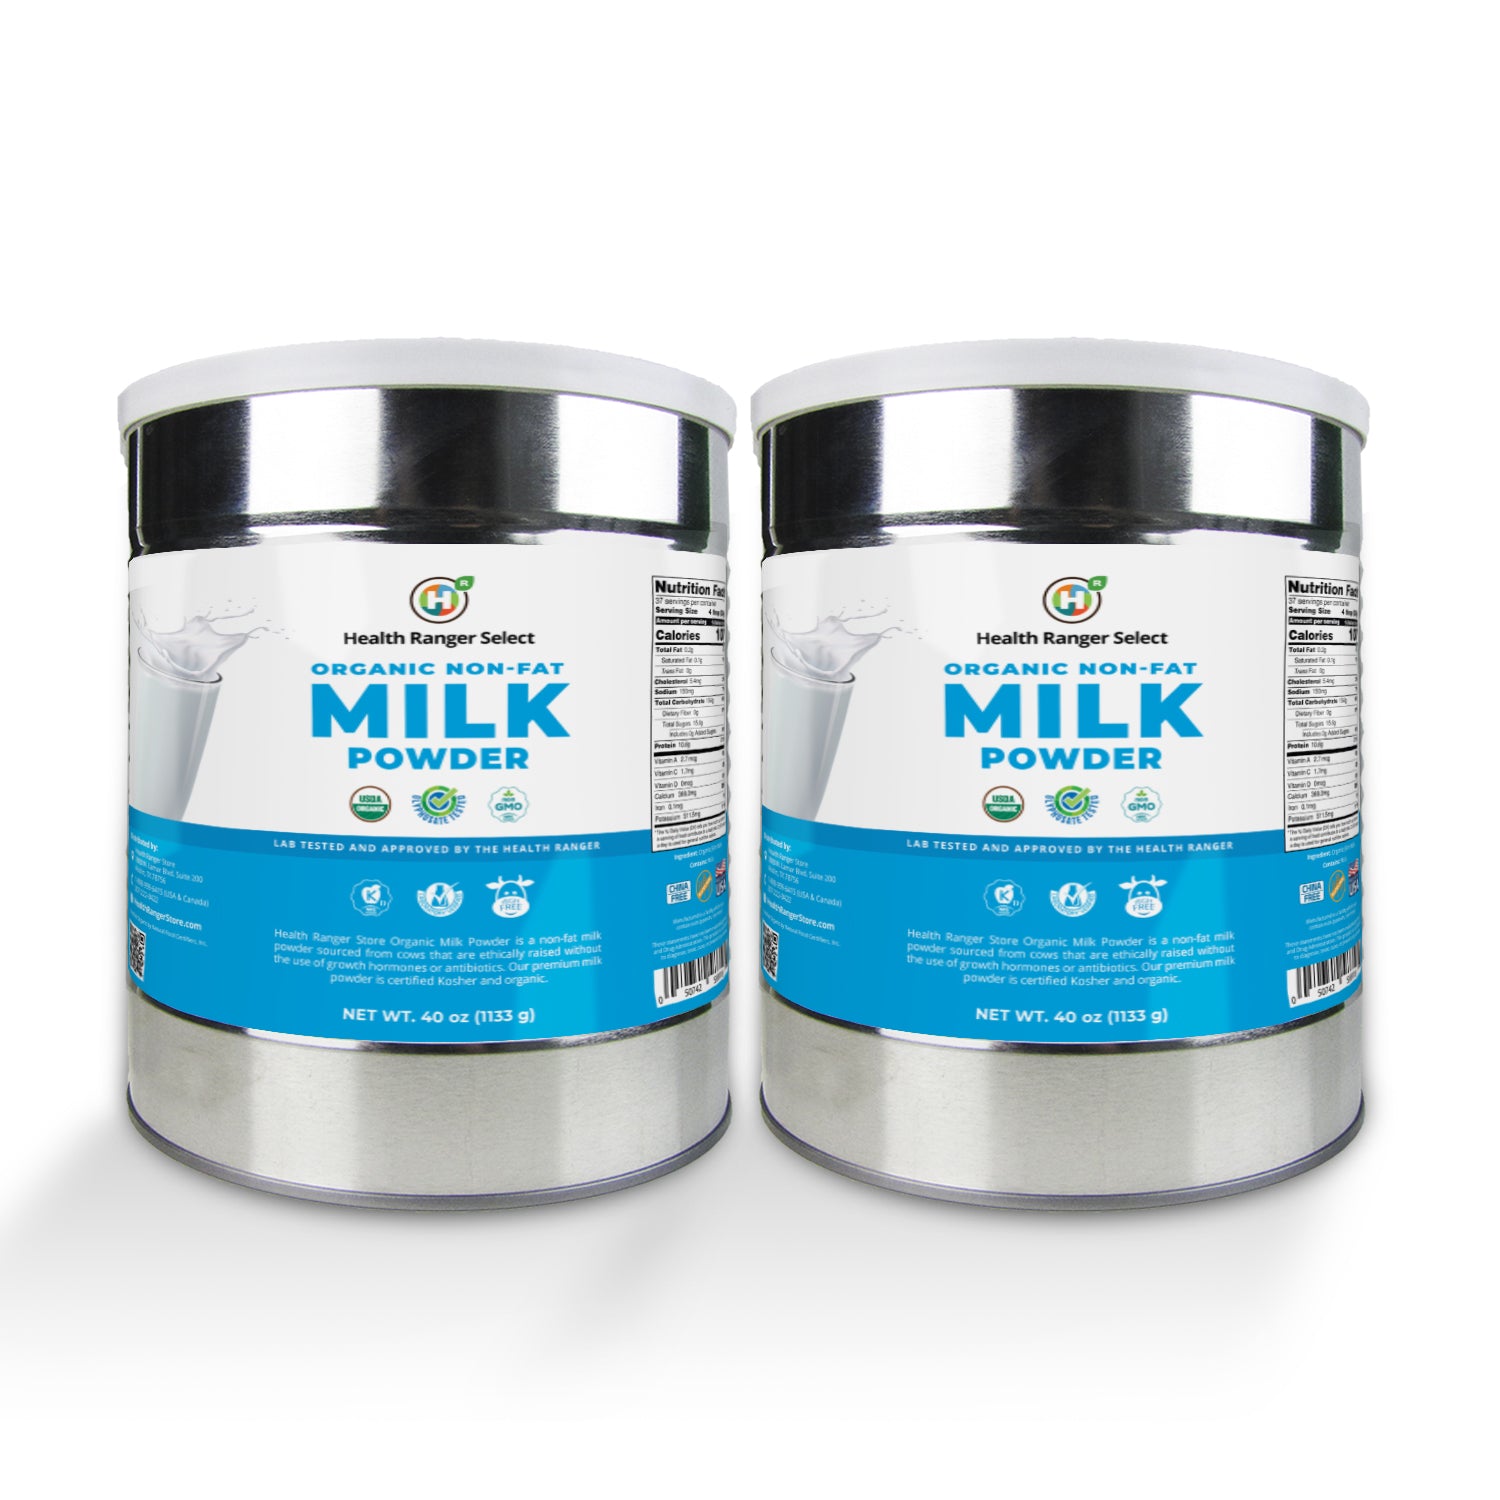 Organic Non-Fat Milk Powder (40 oz, 1133g) 